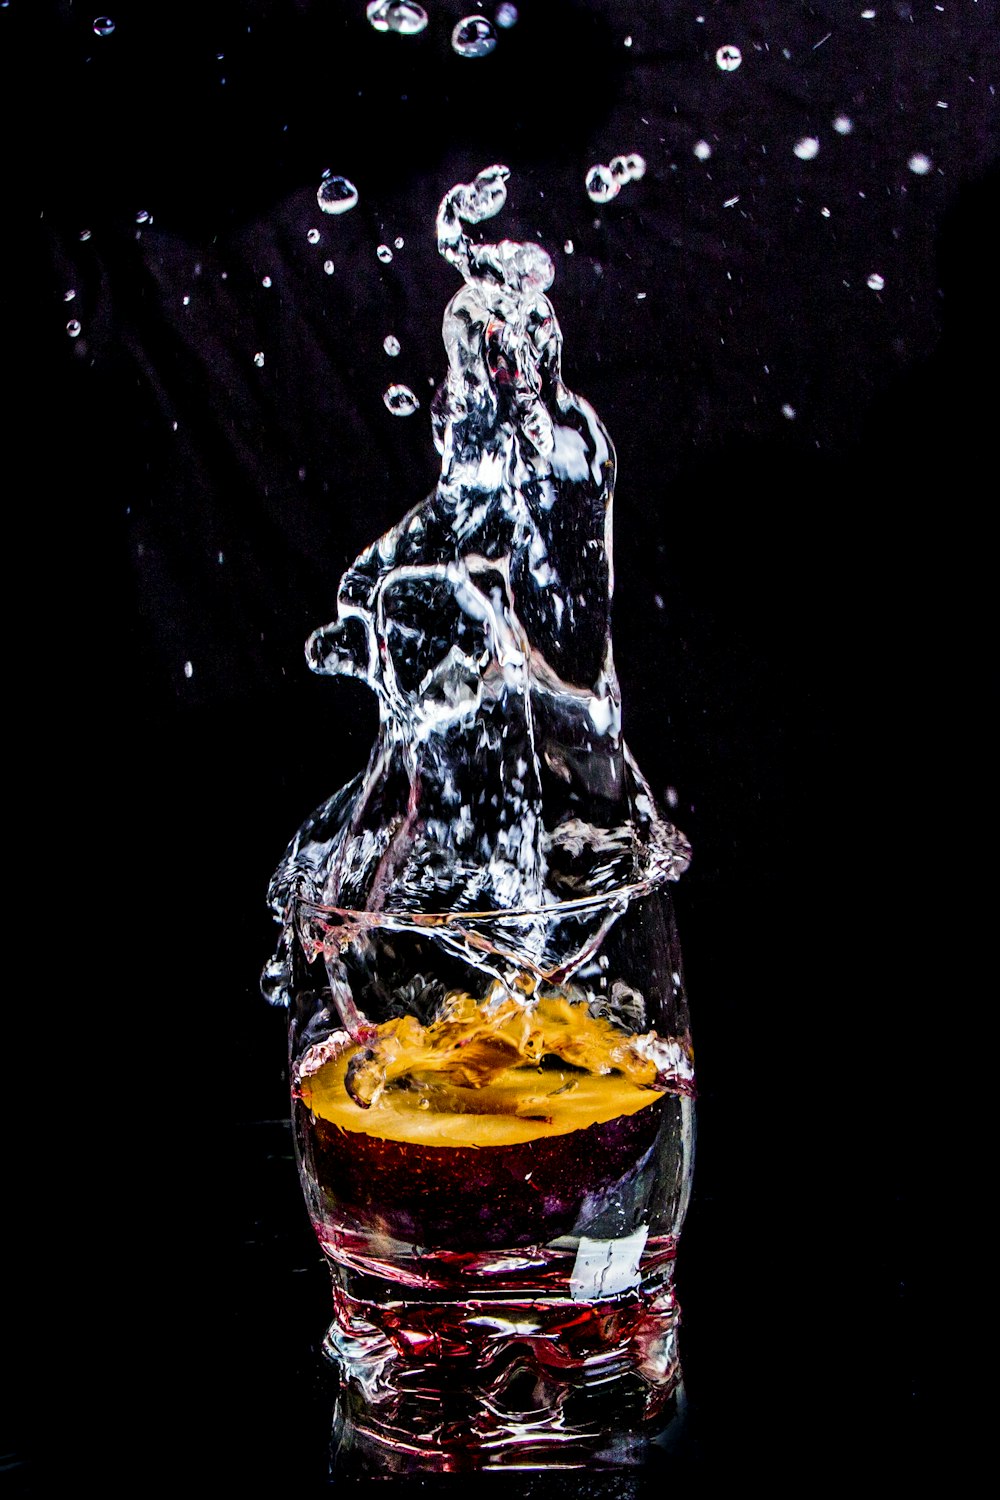 water splash with orange liquid